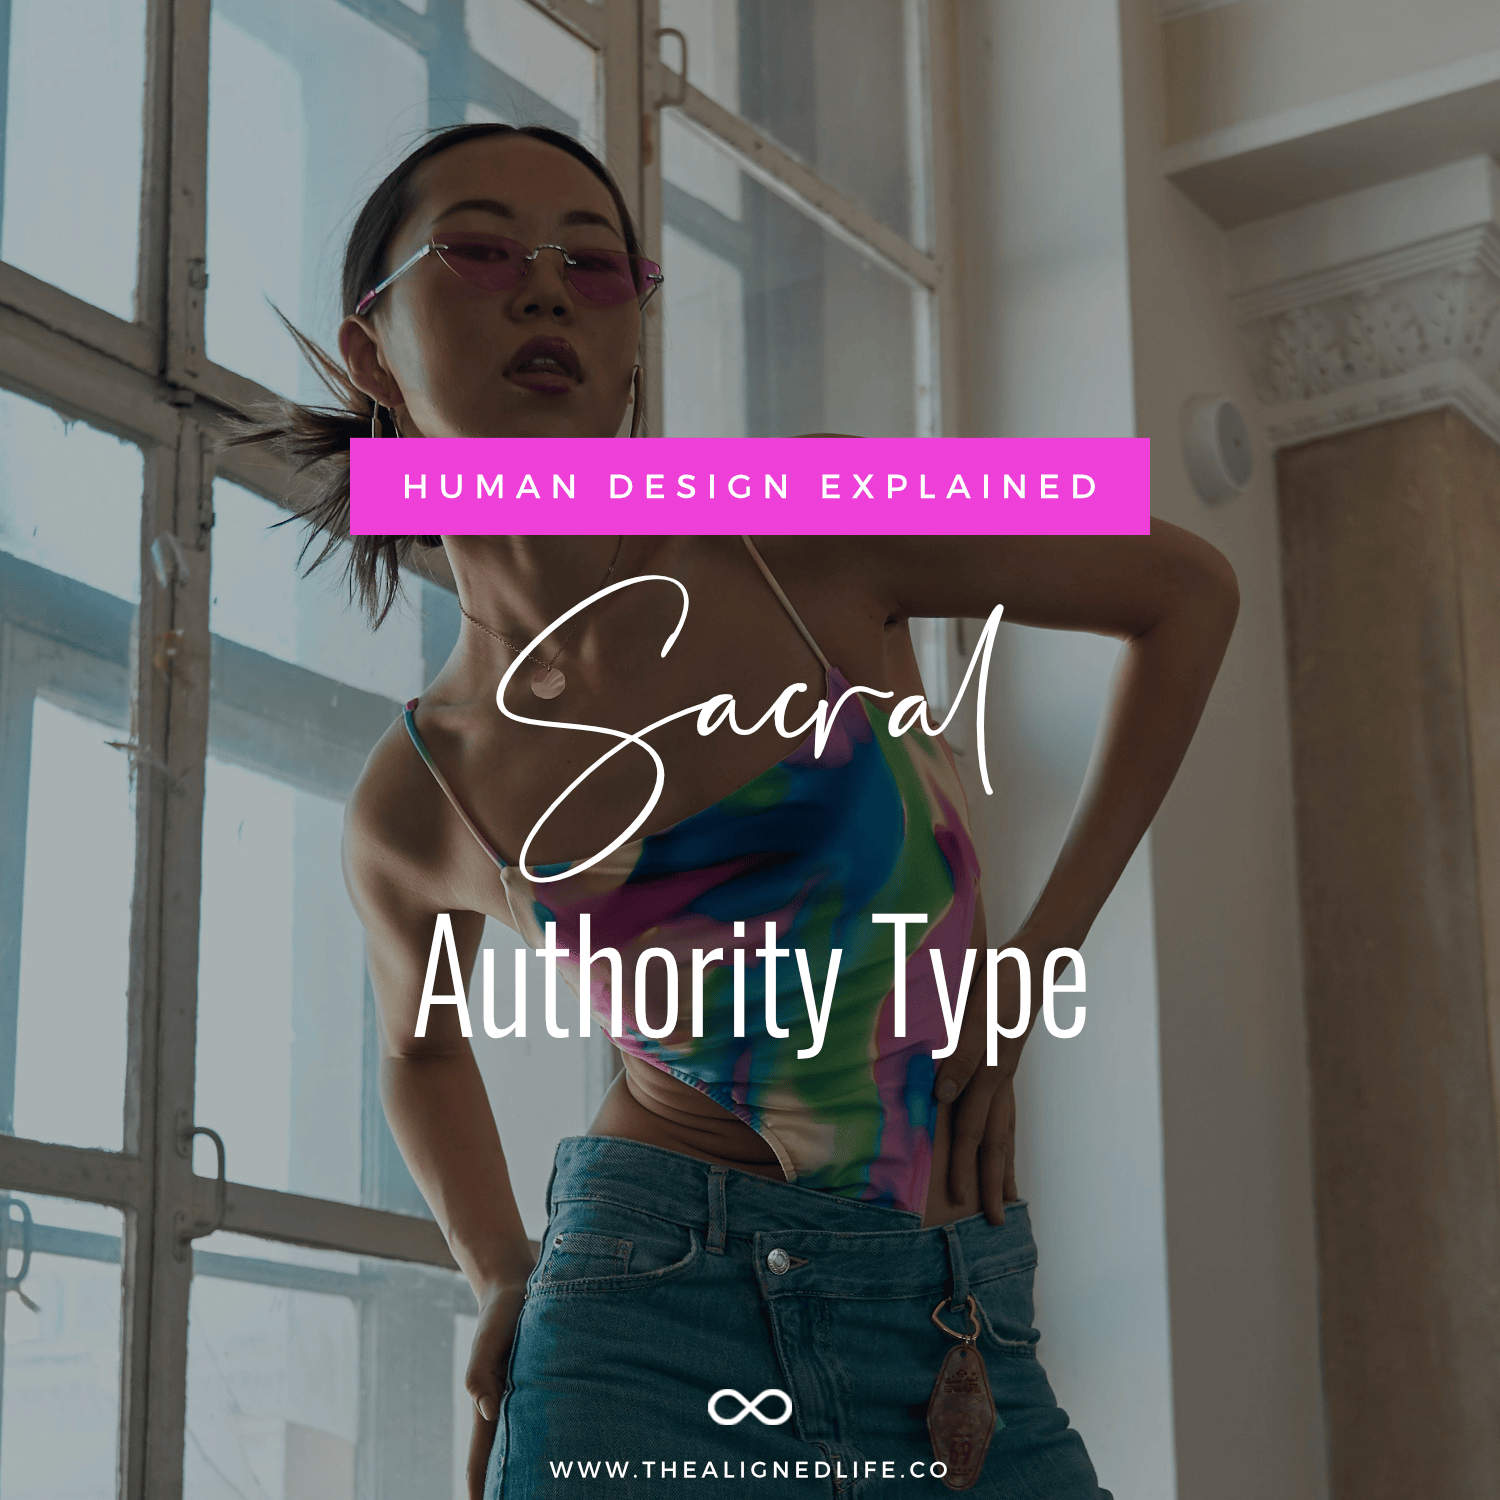 Sacral Authority Type | Human Design Explained